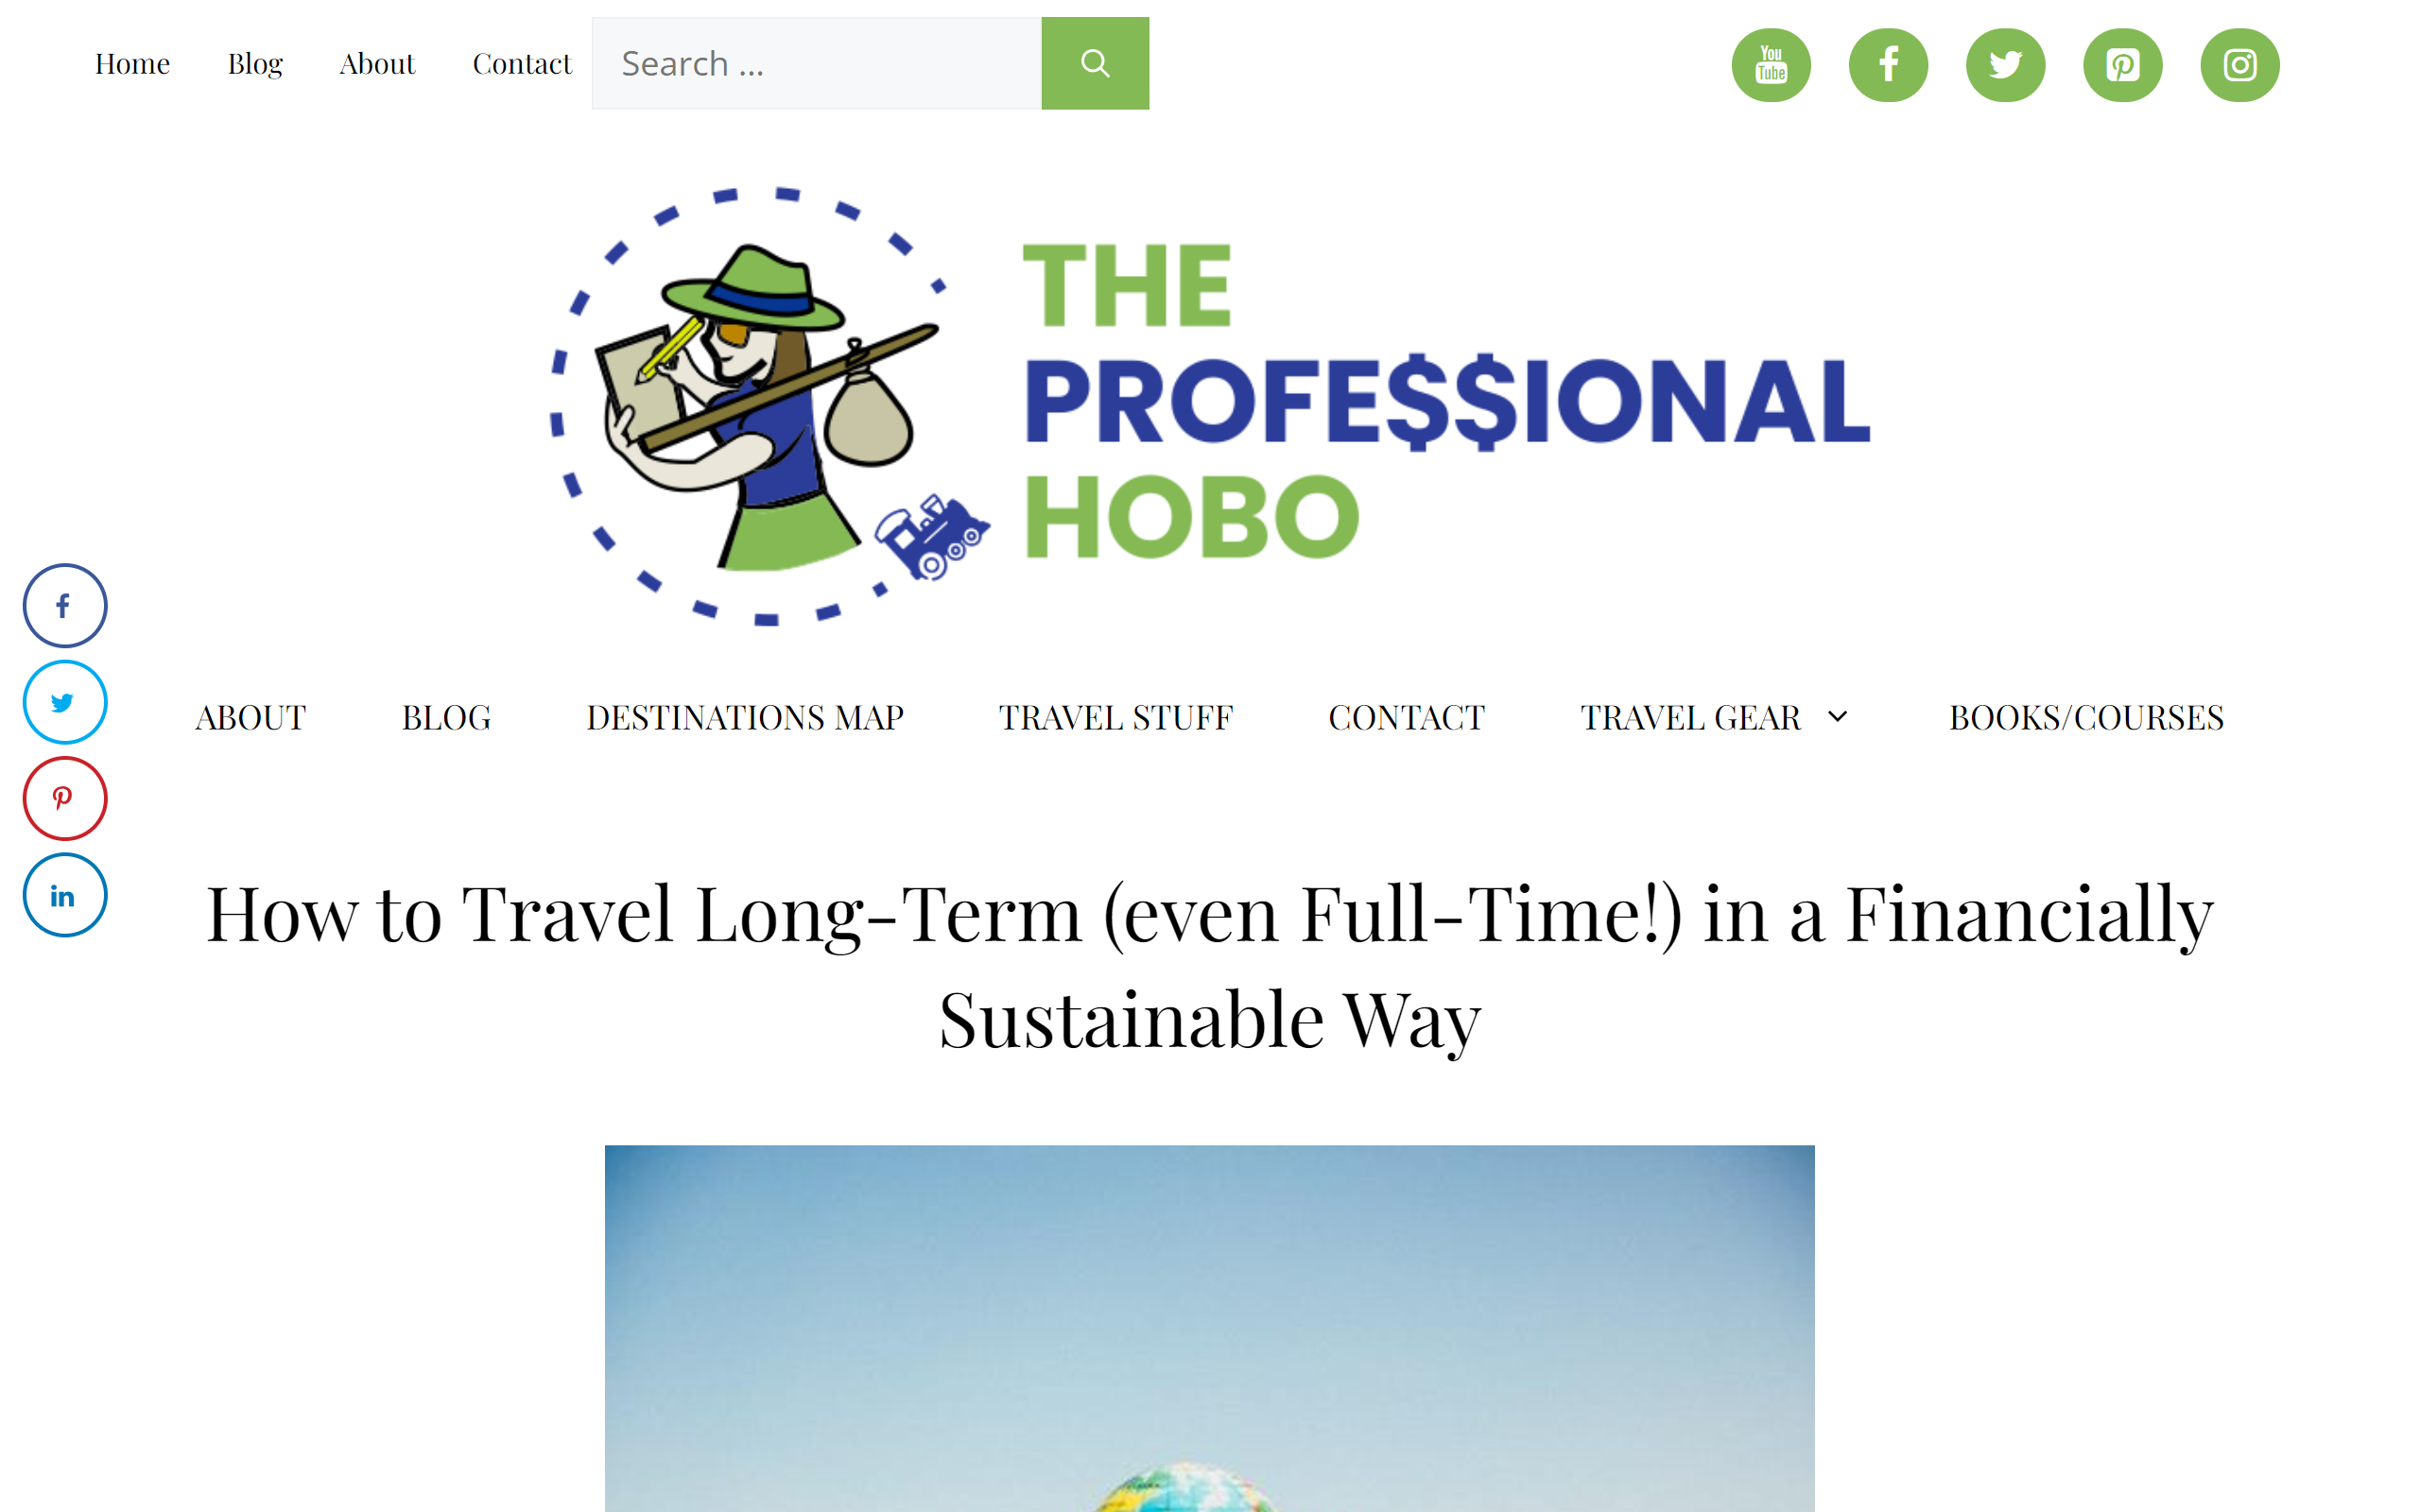 The Professional Hobo travel blog